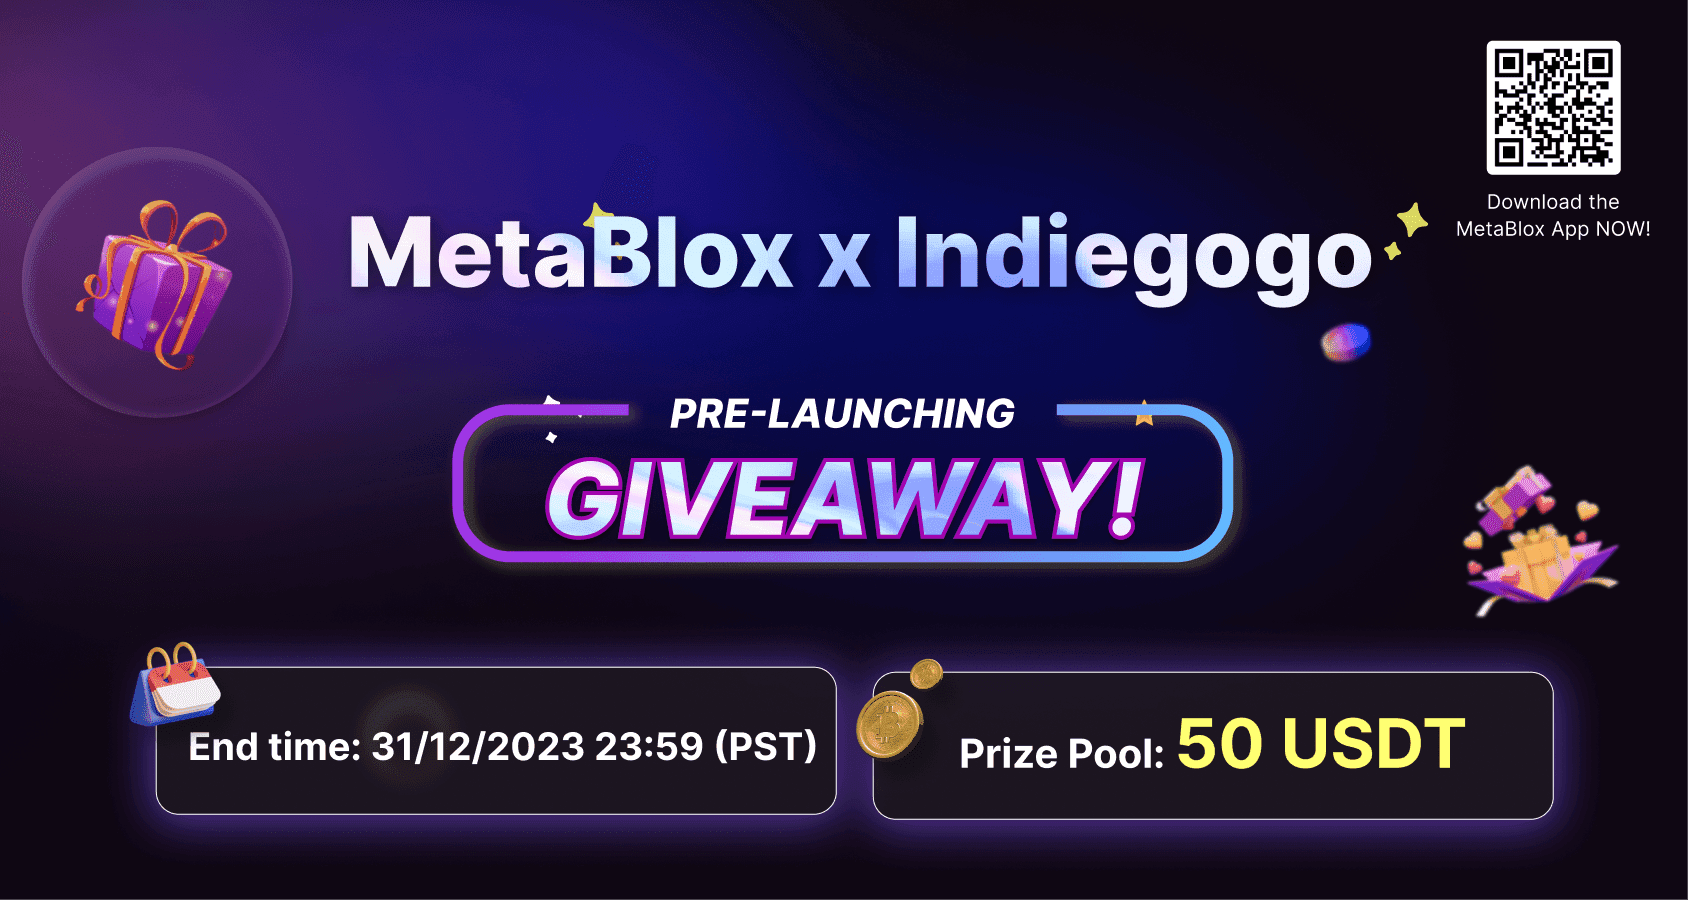 MetaBlox x Indiegogo: Pre-launching GIVEAWAY